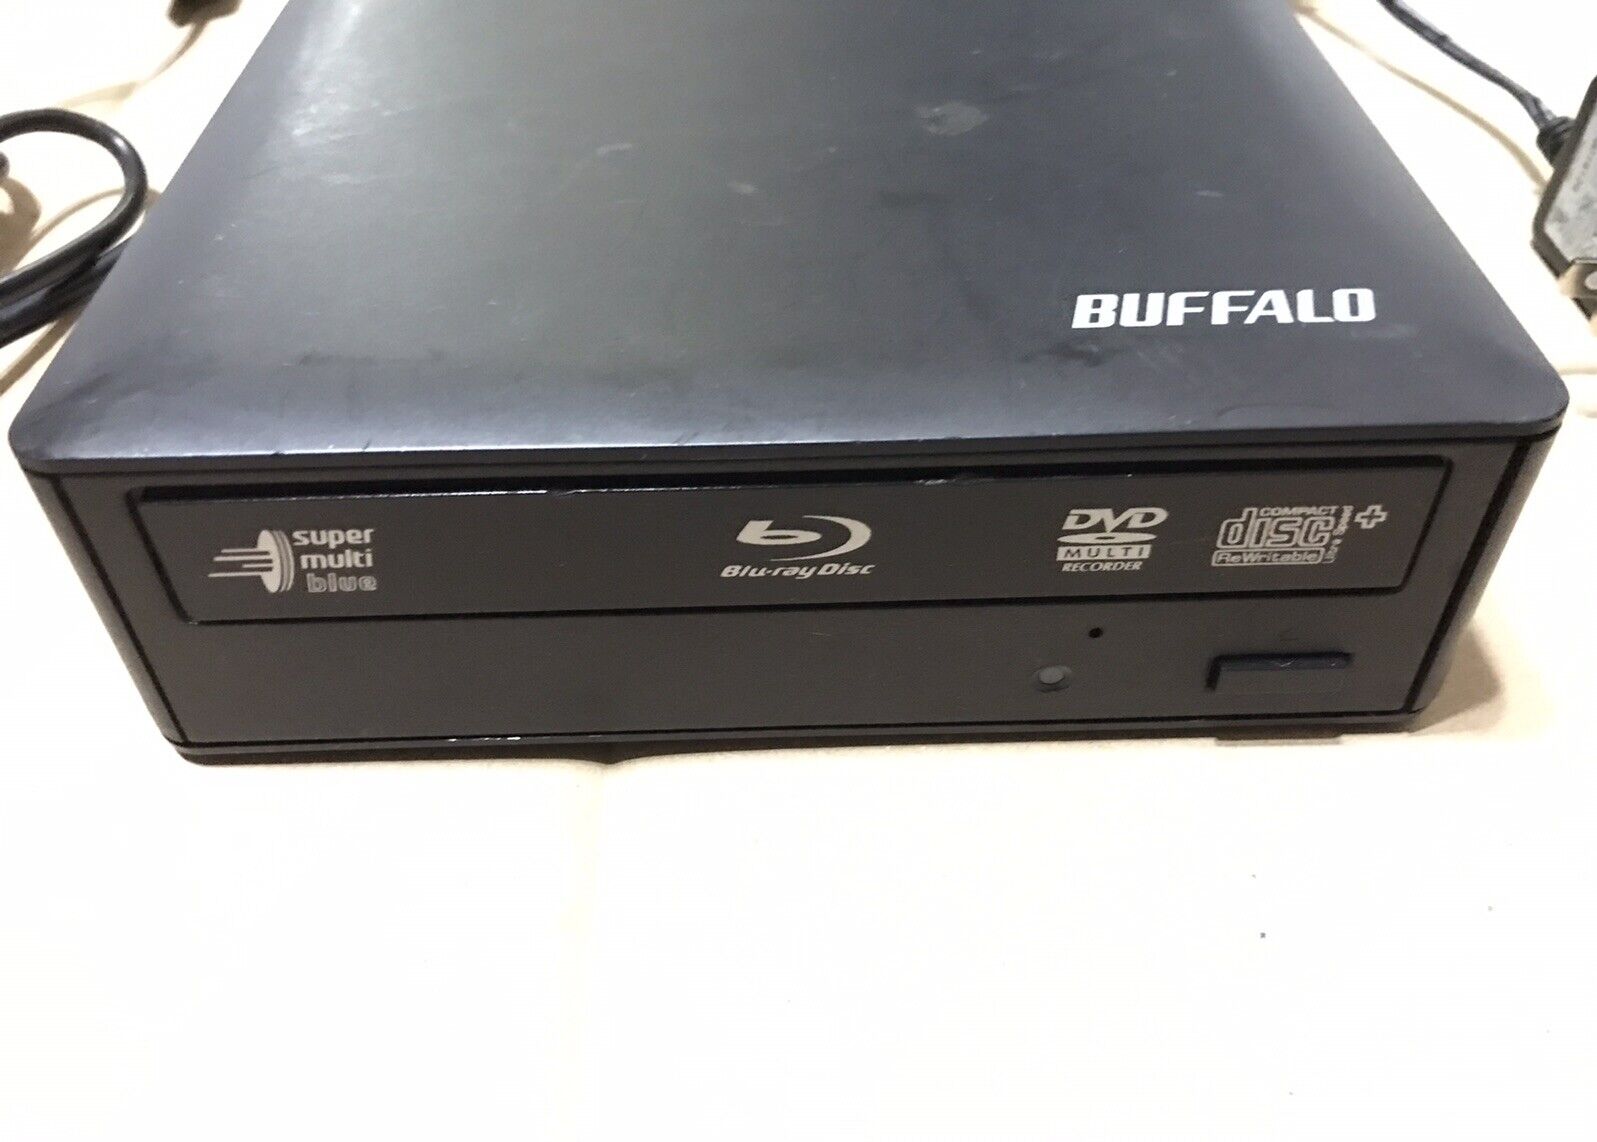 BUFFALO USB 2.0 8X External Compact Blu-Ray Writer/Drive Model BR-X816U2